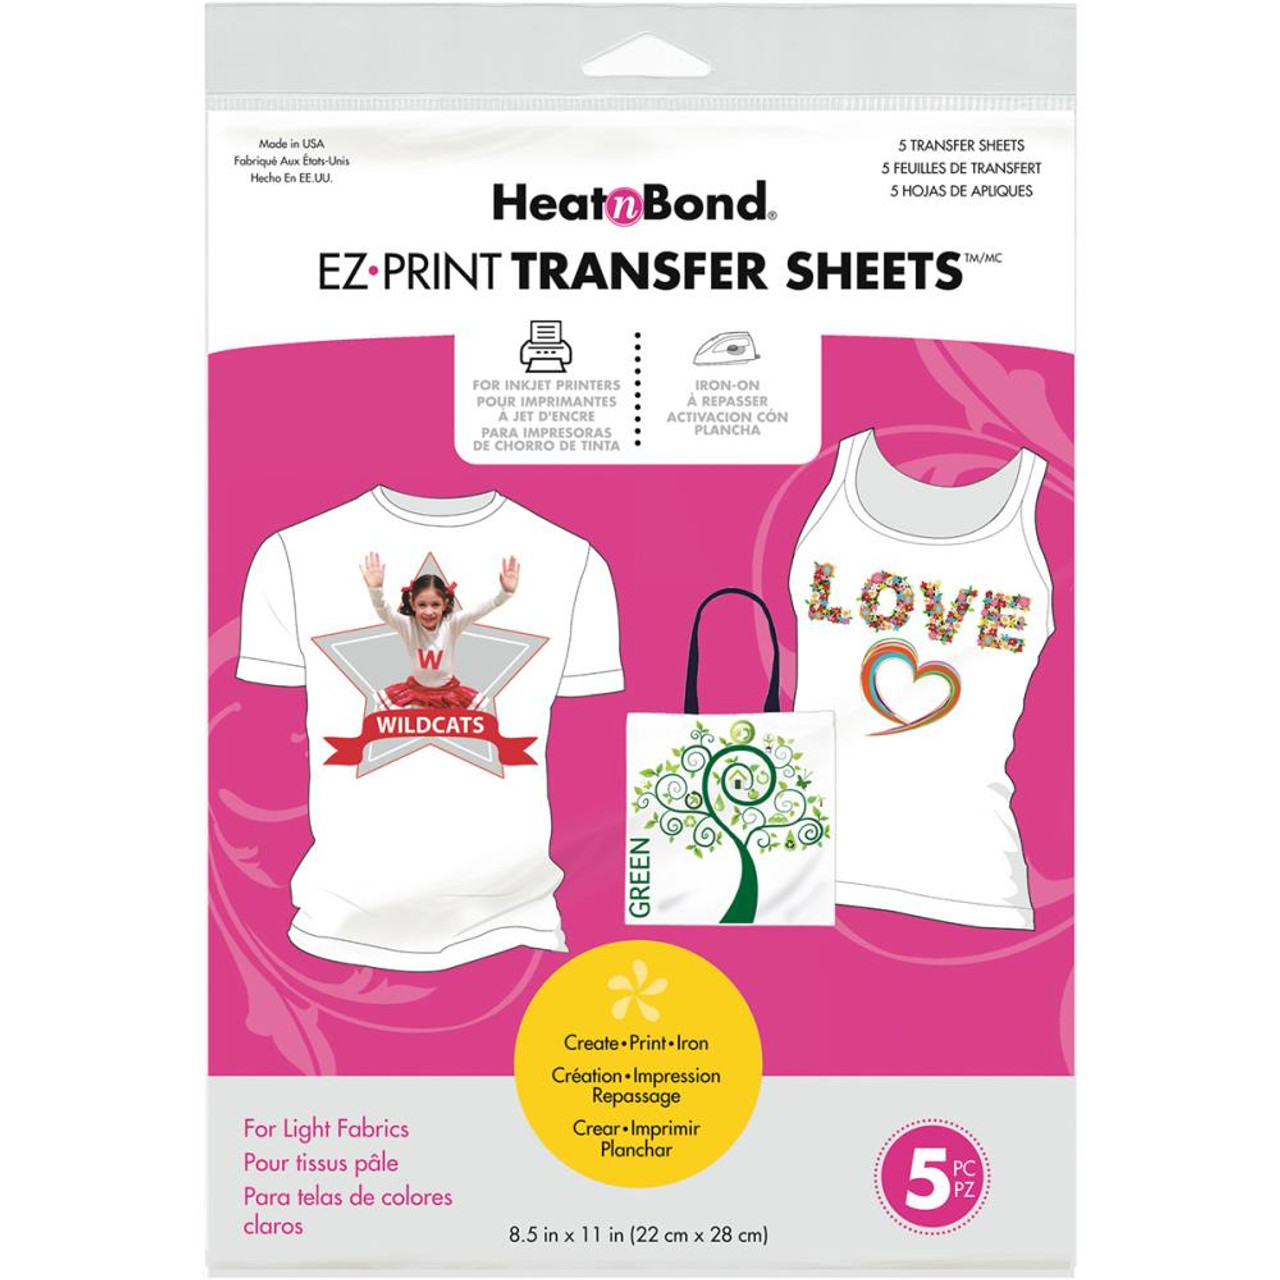 Jacquard Products — Inkjet Fabric Sheets